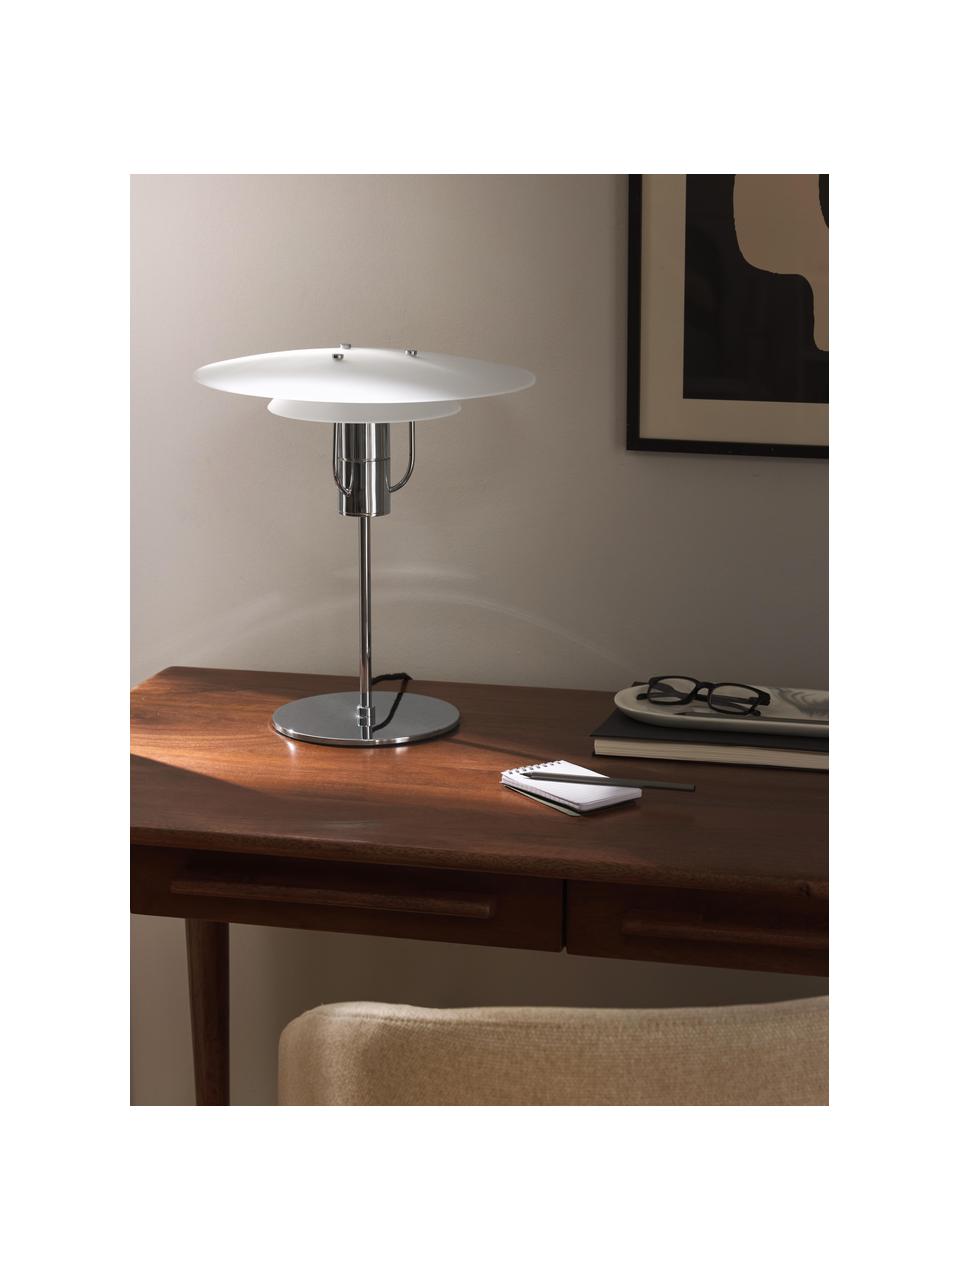 Lámpara de mesa Kali, Pantalla: vidrio, Cable: forro textil, Blanco, cromo, Ø 35 x Al 40 cm